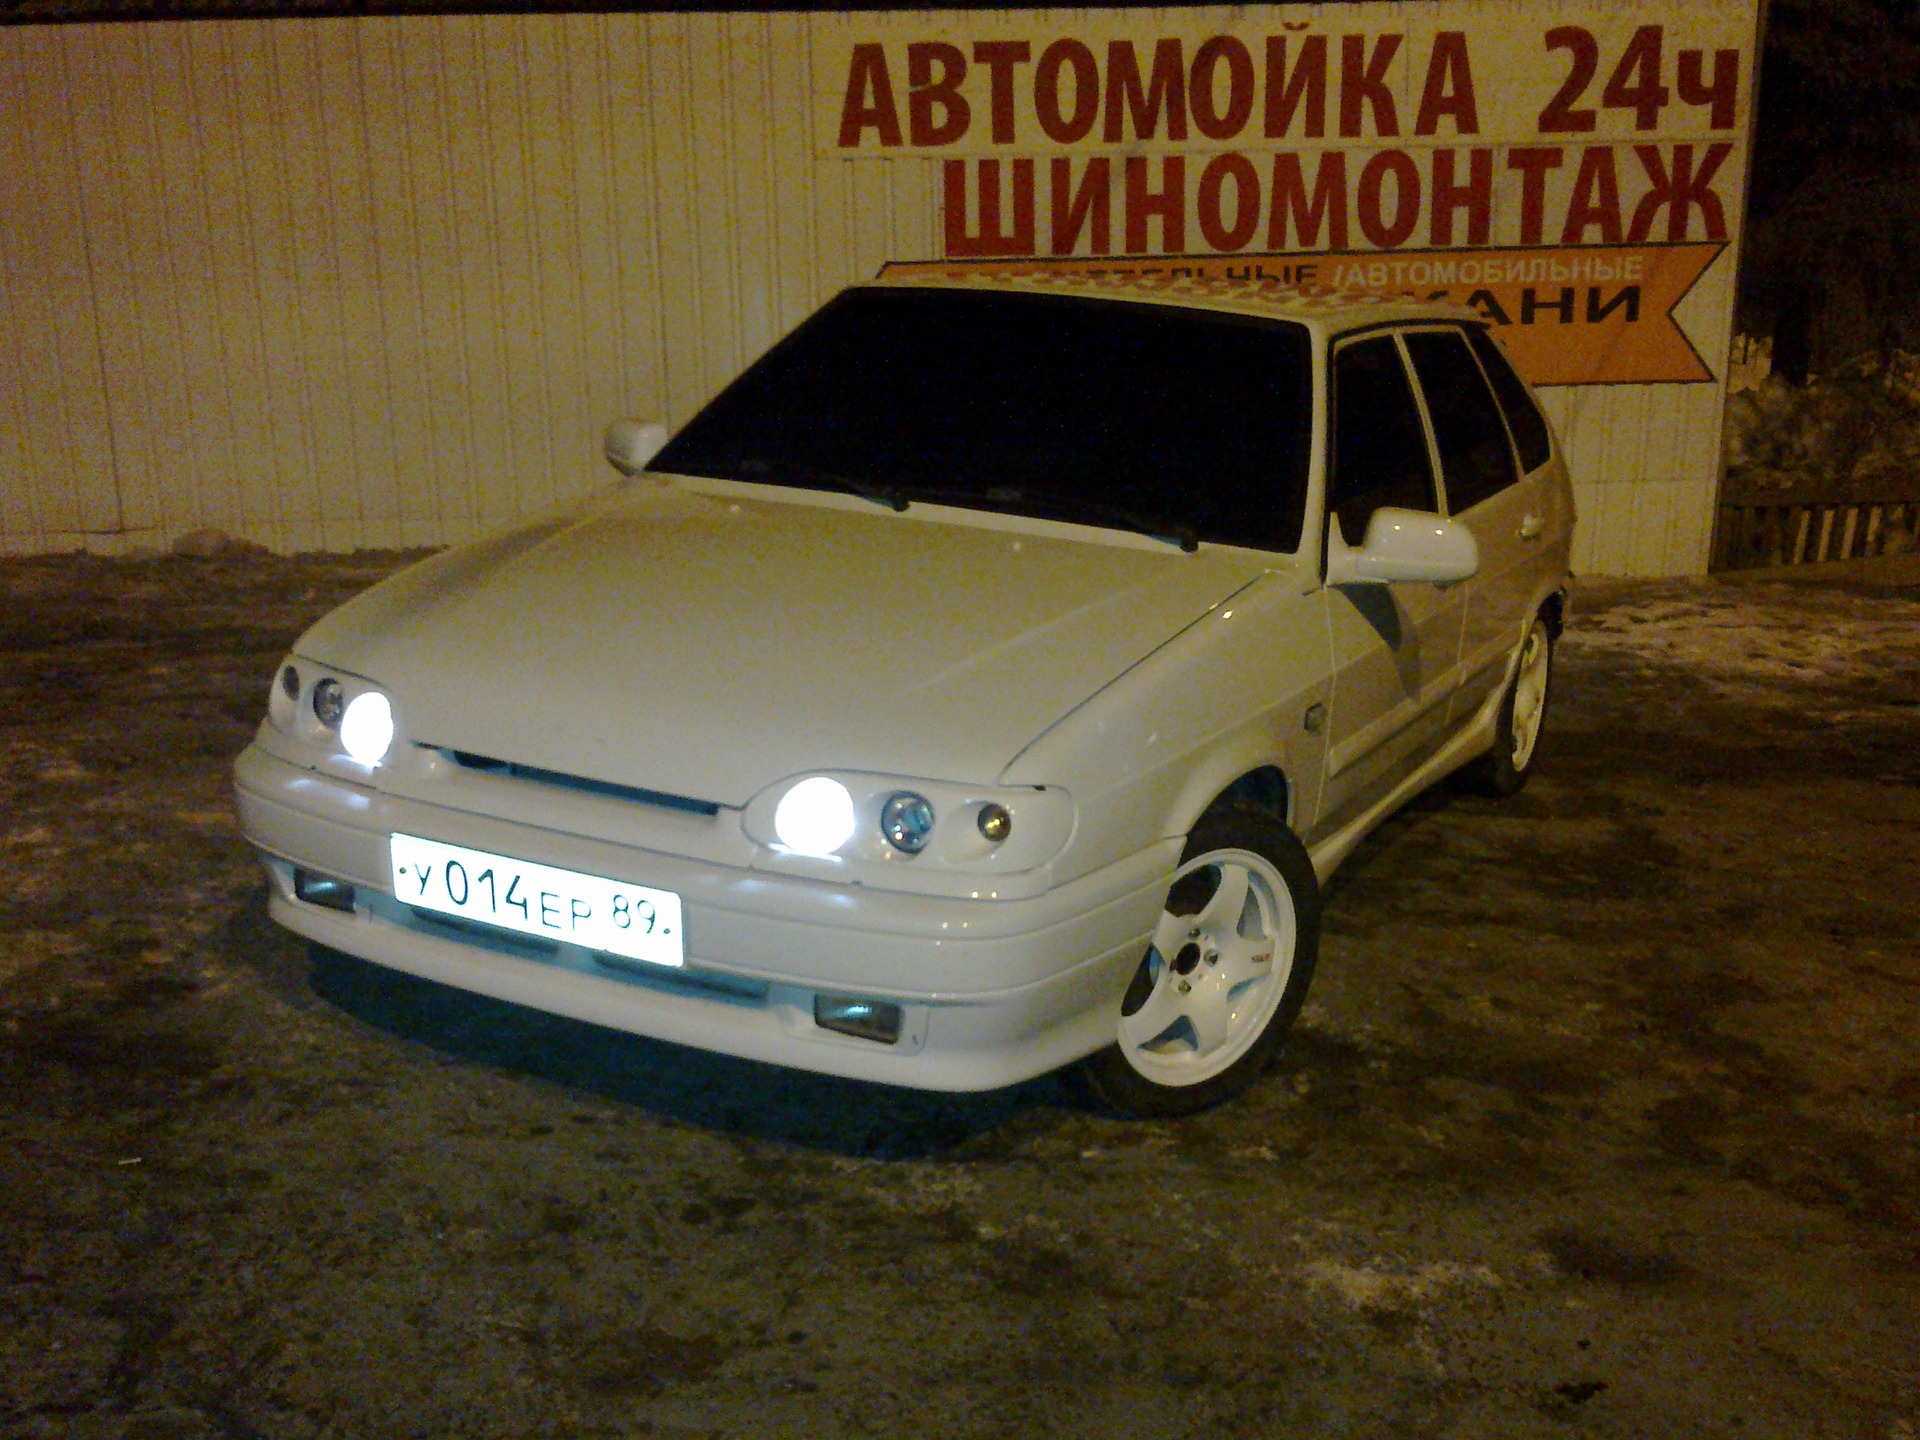 Продажа автомобилей татарск. ВАЗ 2114 снова мойка.